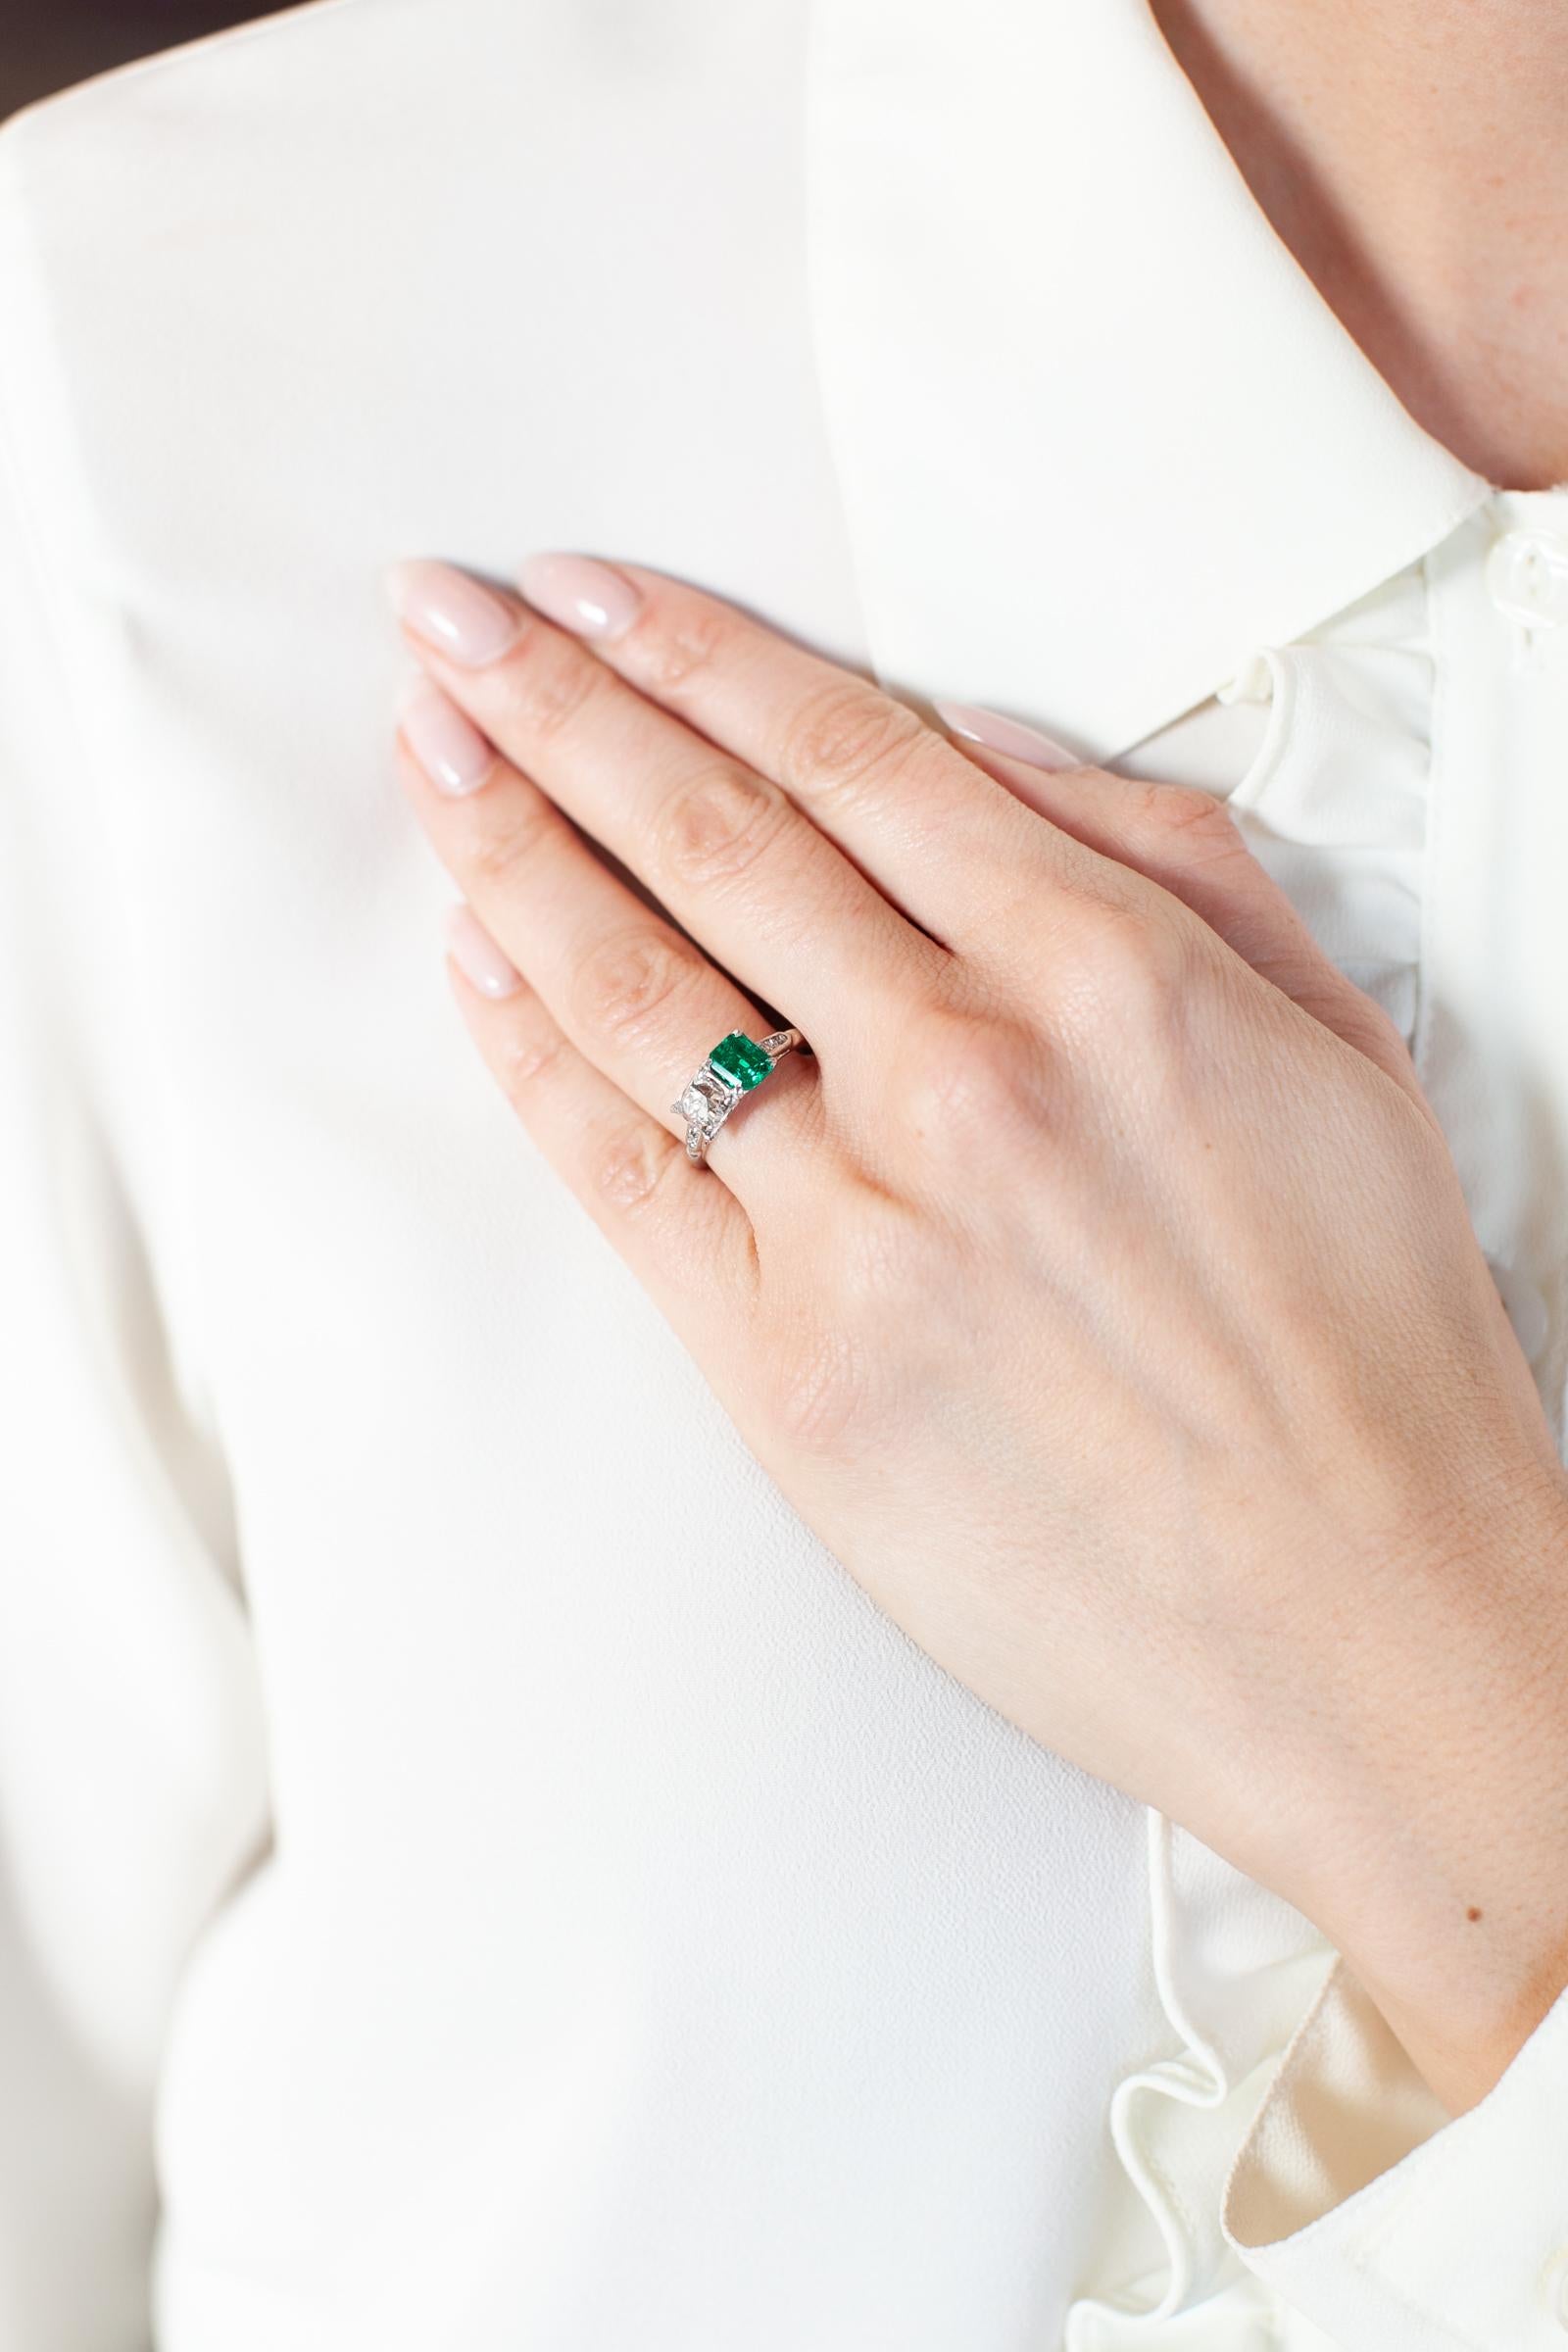 Women's Art Deco Era 1.51 Carat French Cut Diamond & 1.02 Carat Emerald Toi et Moi Ring For Sale